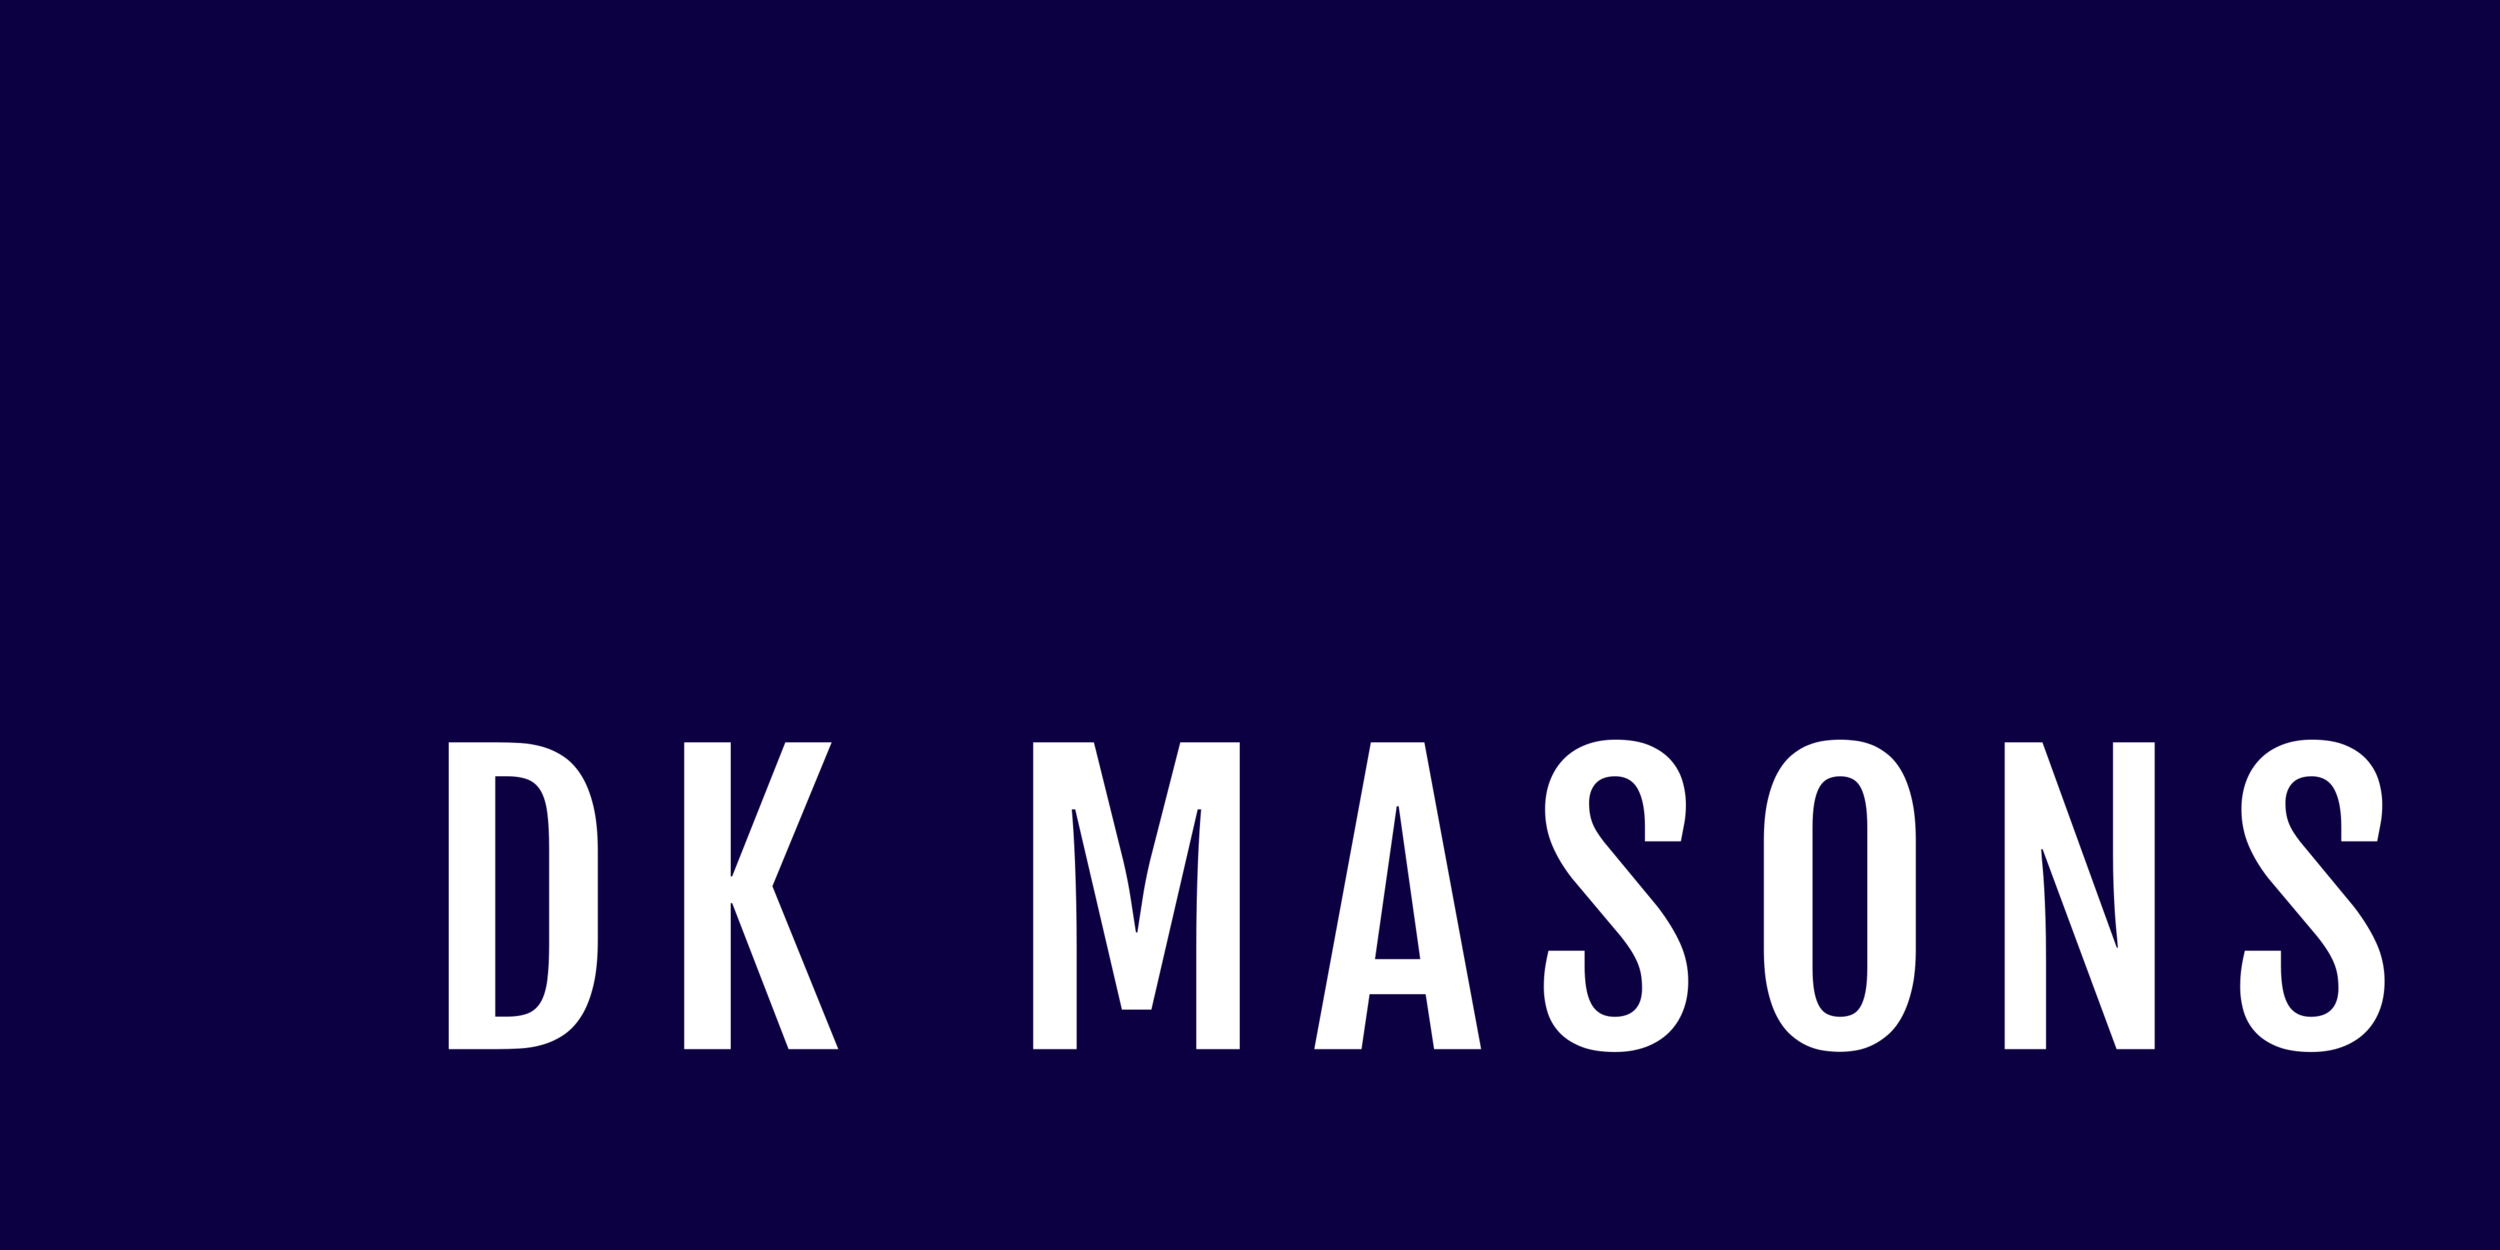 DK Masons